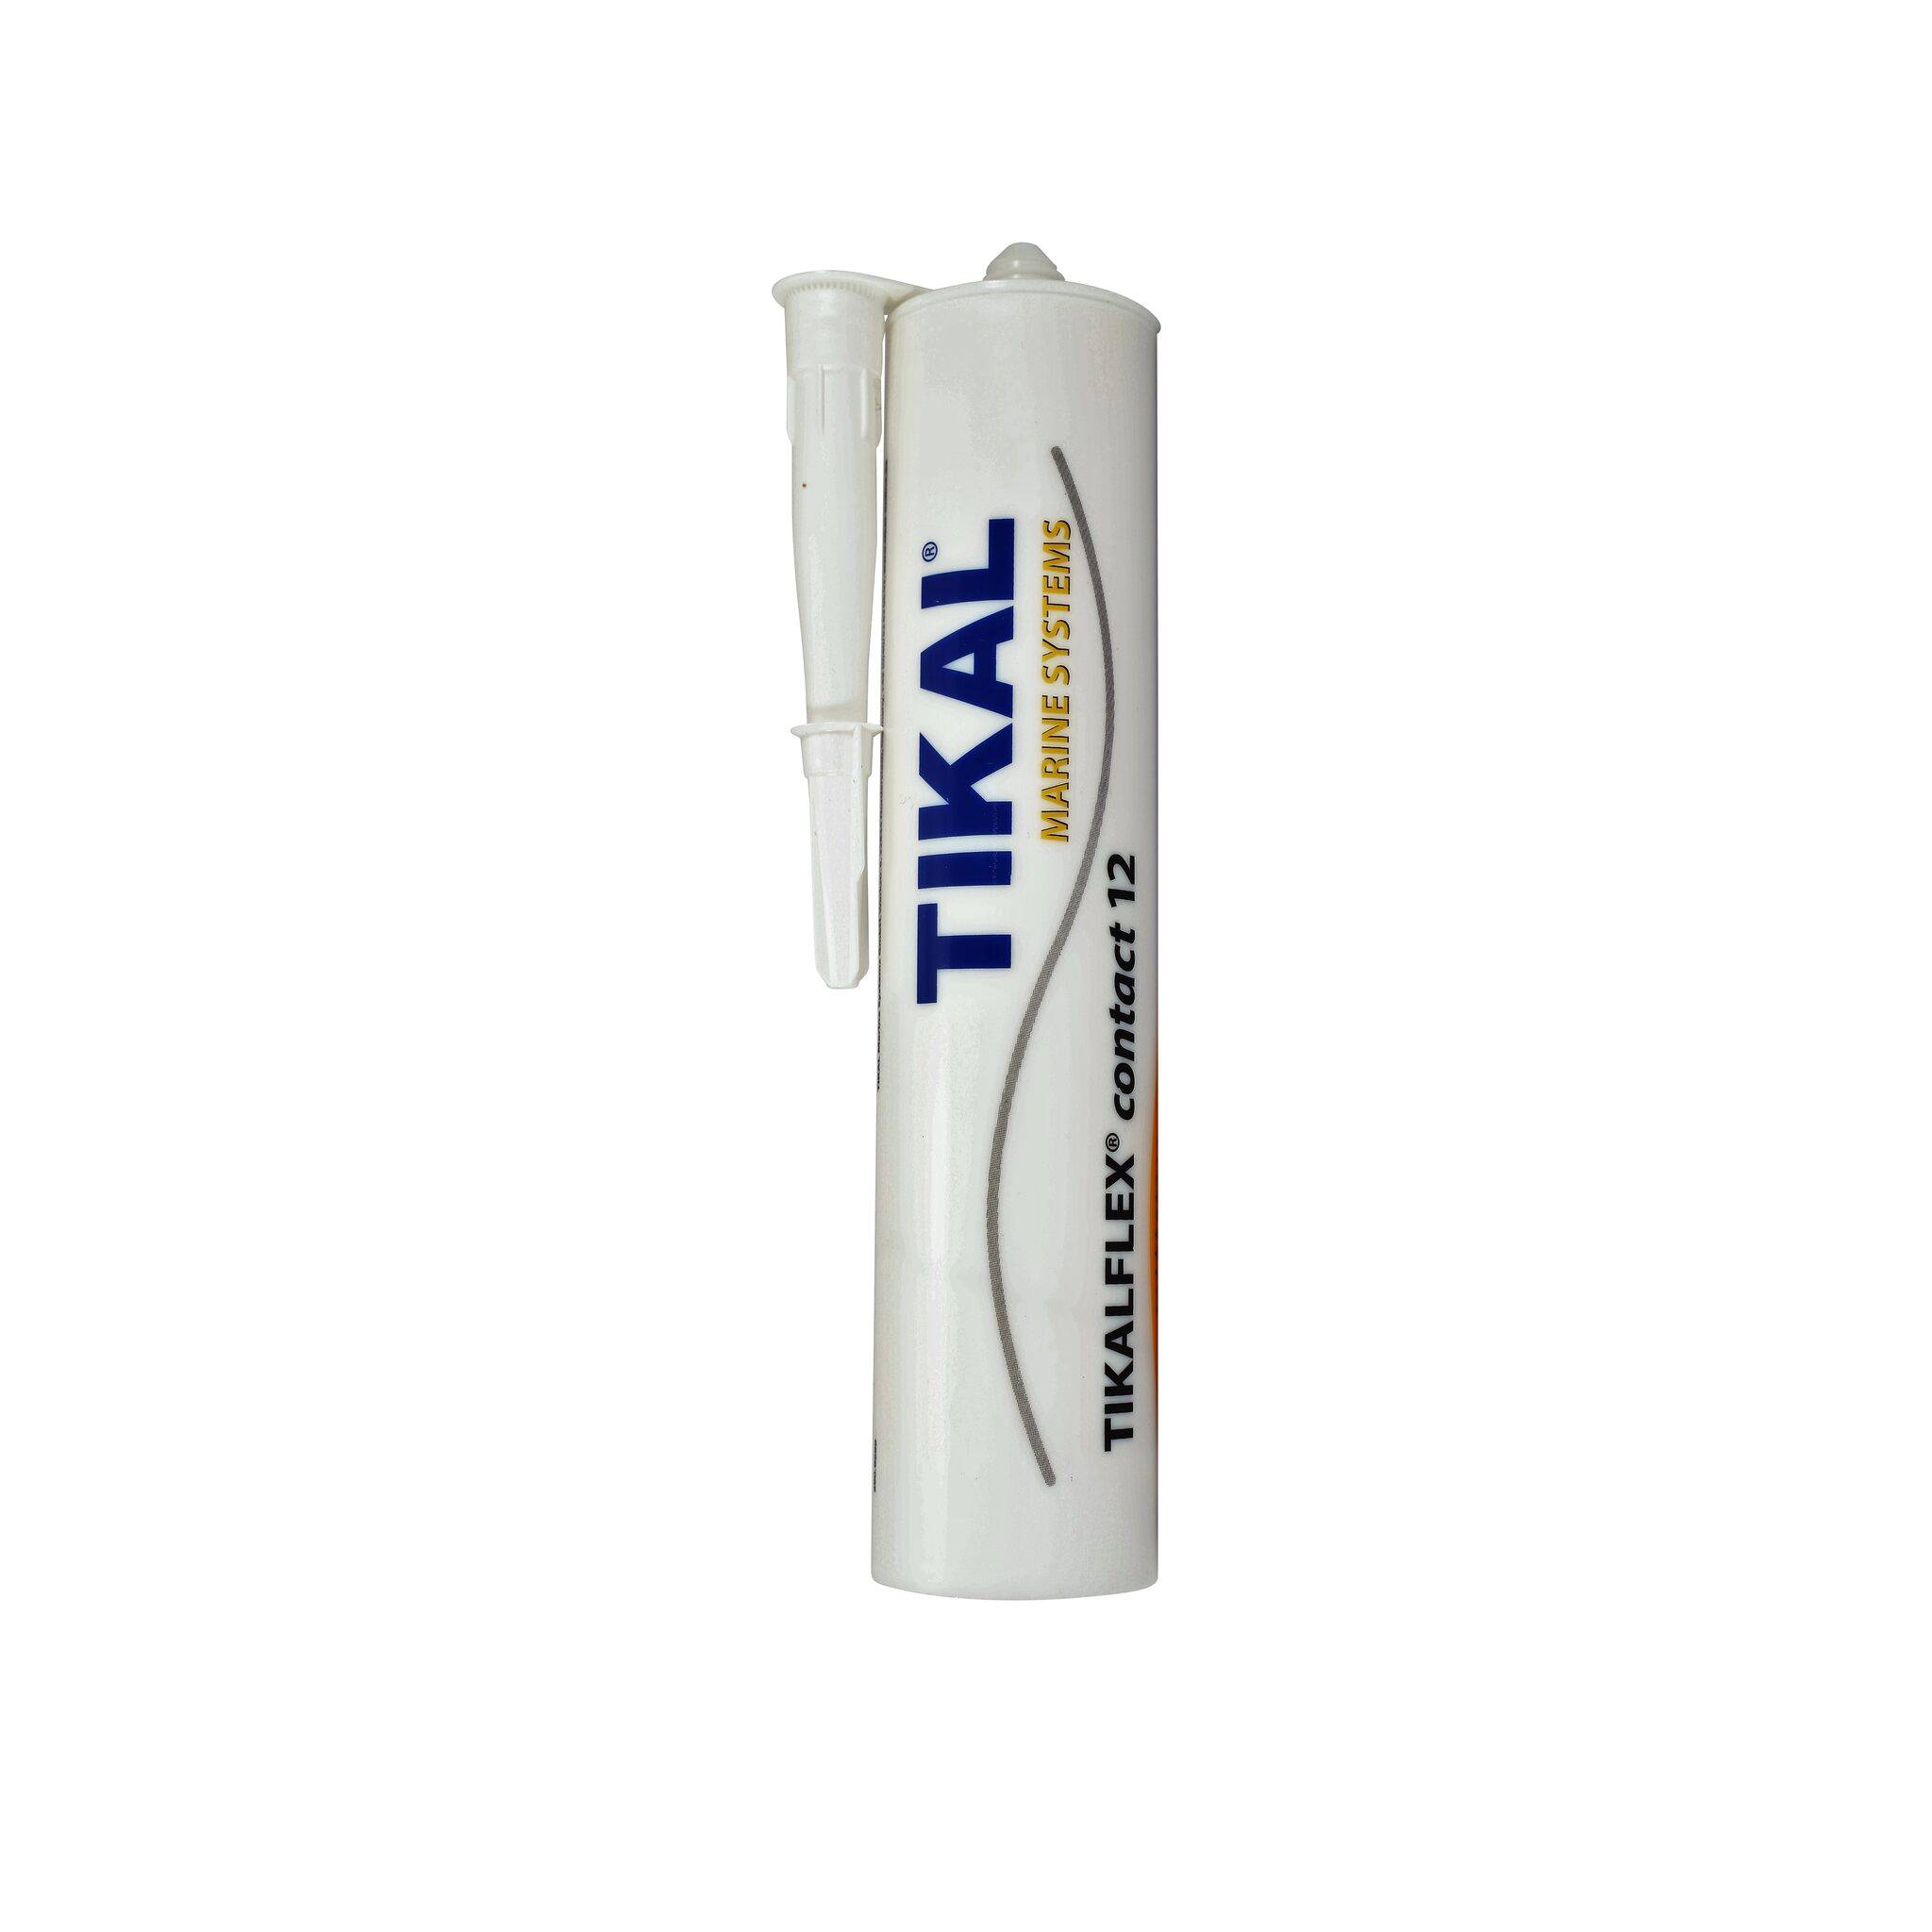 TIKALFLEX Contact 12 MS polymer adhesive